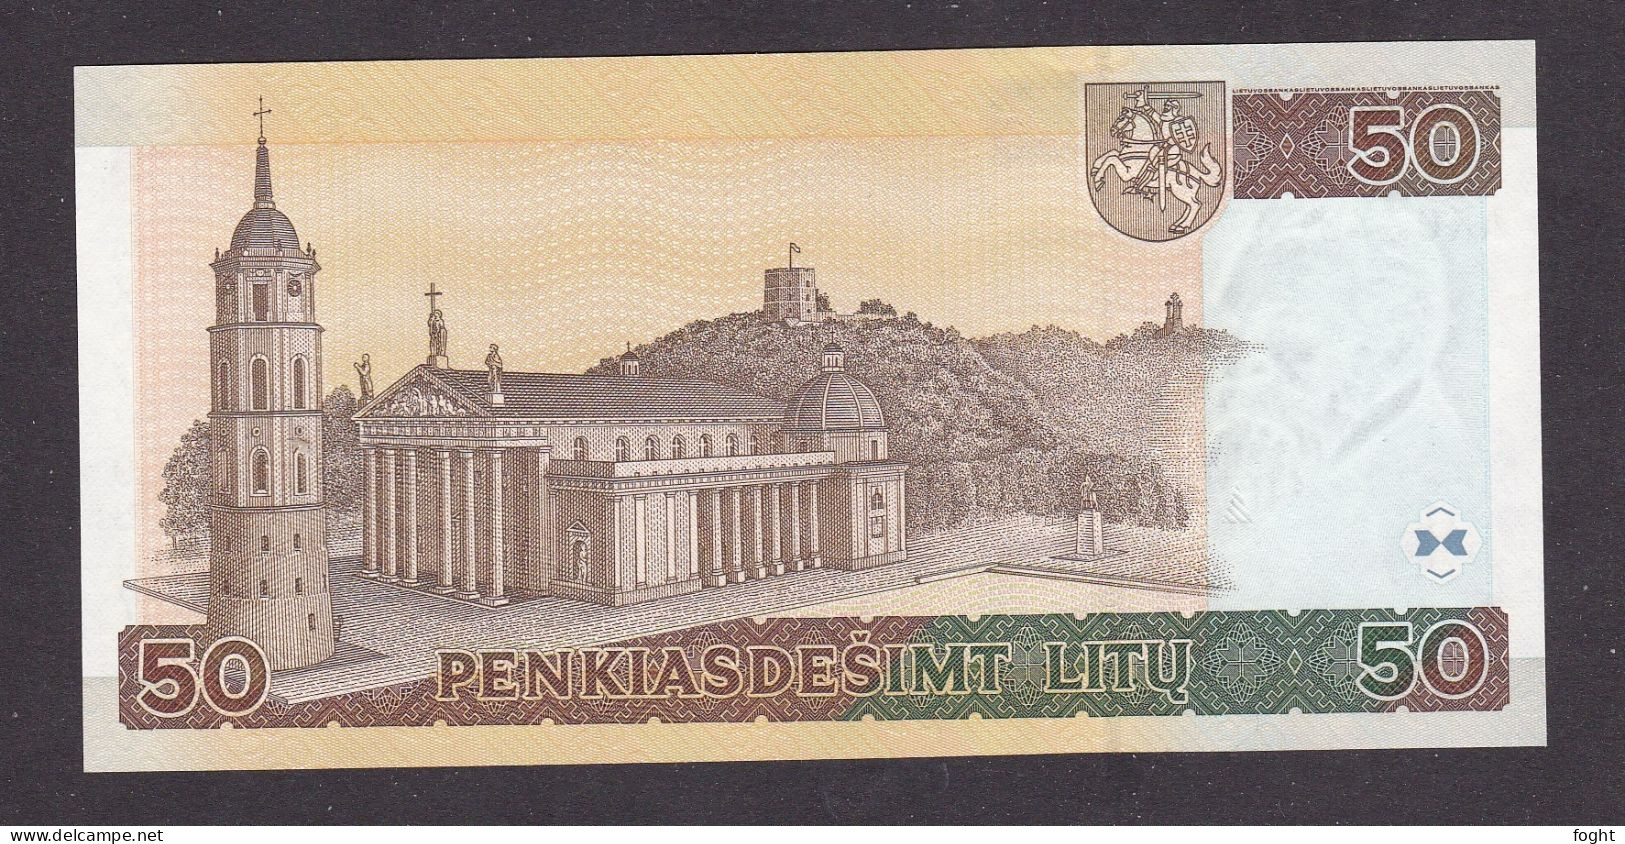 2003 AK Lithuania Bank Of Lithuania Banknote 50 Litų,P#67,UNC - Lituania